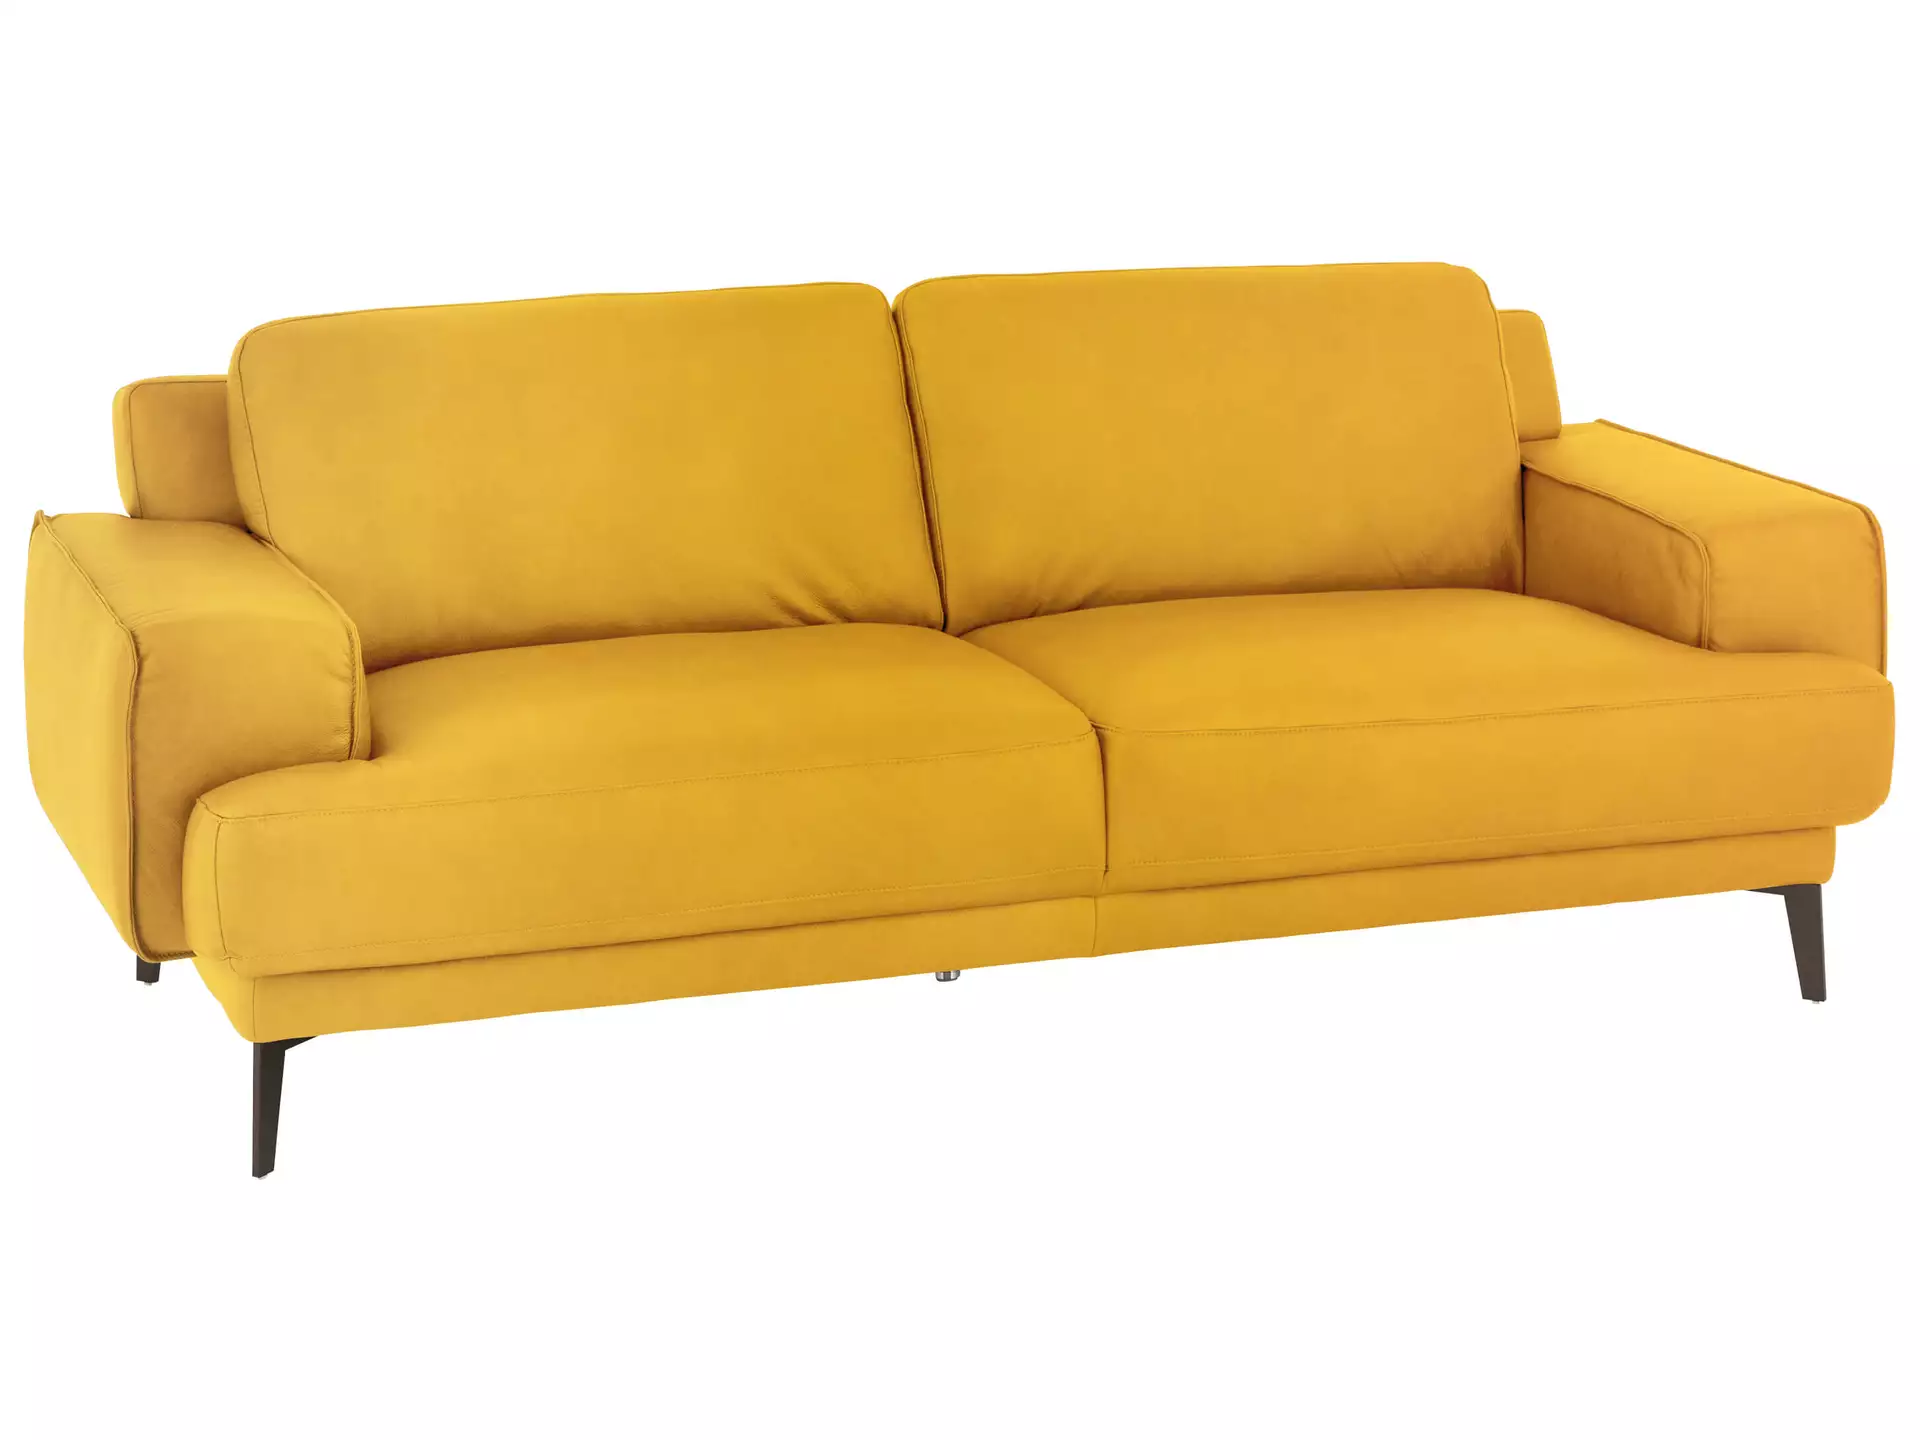 Sofa Foscaari Basic B: 213 cm Schillig Willi / Farbe: Sunrise / Material: Leder Basic